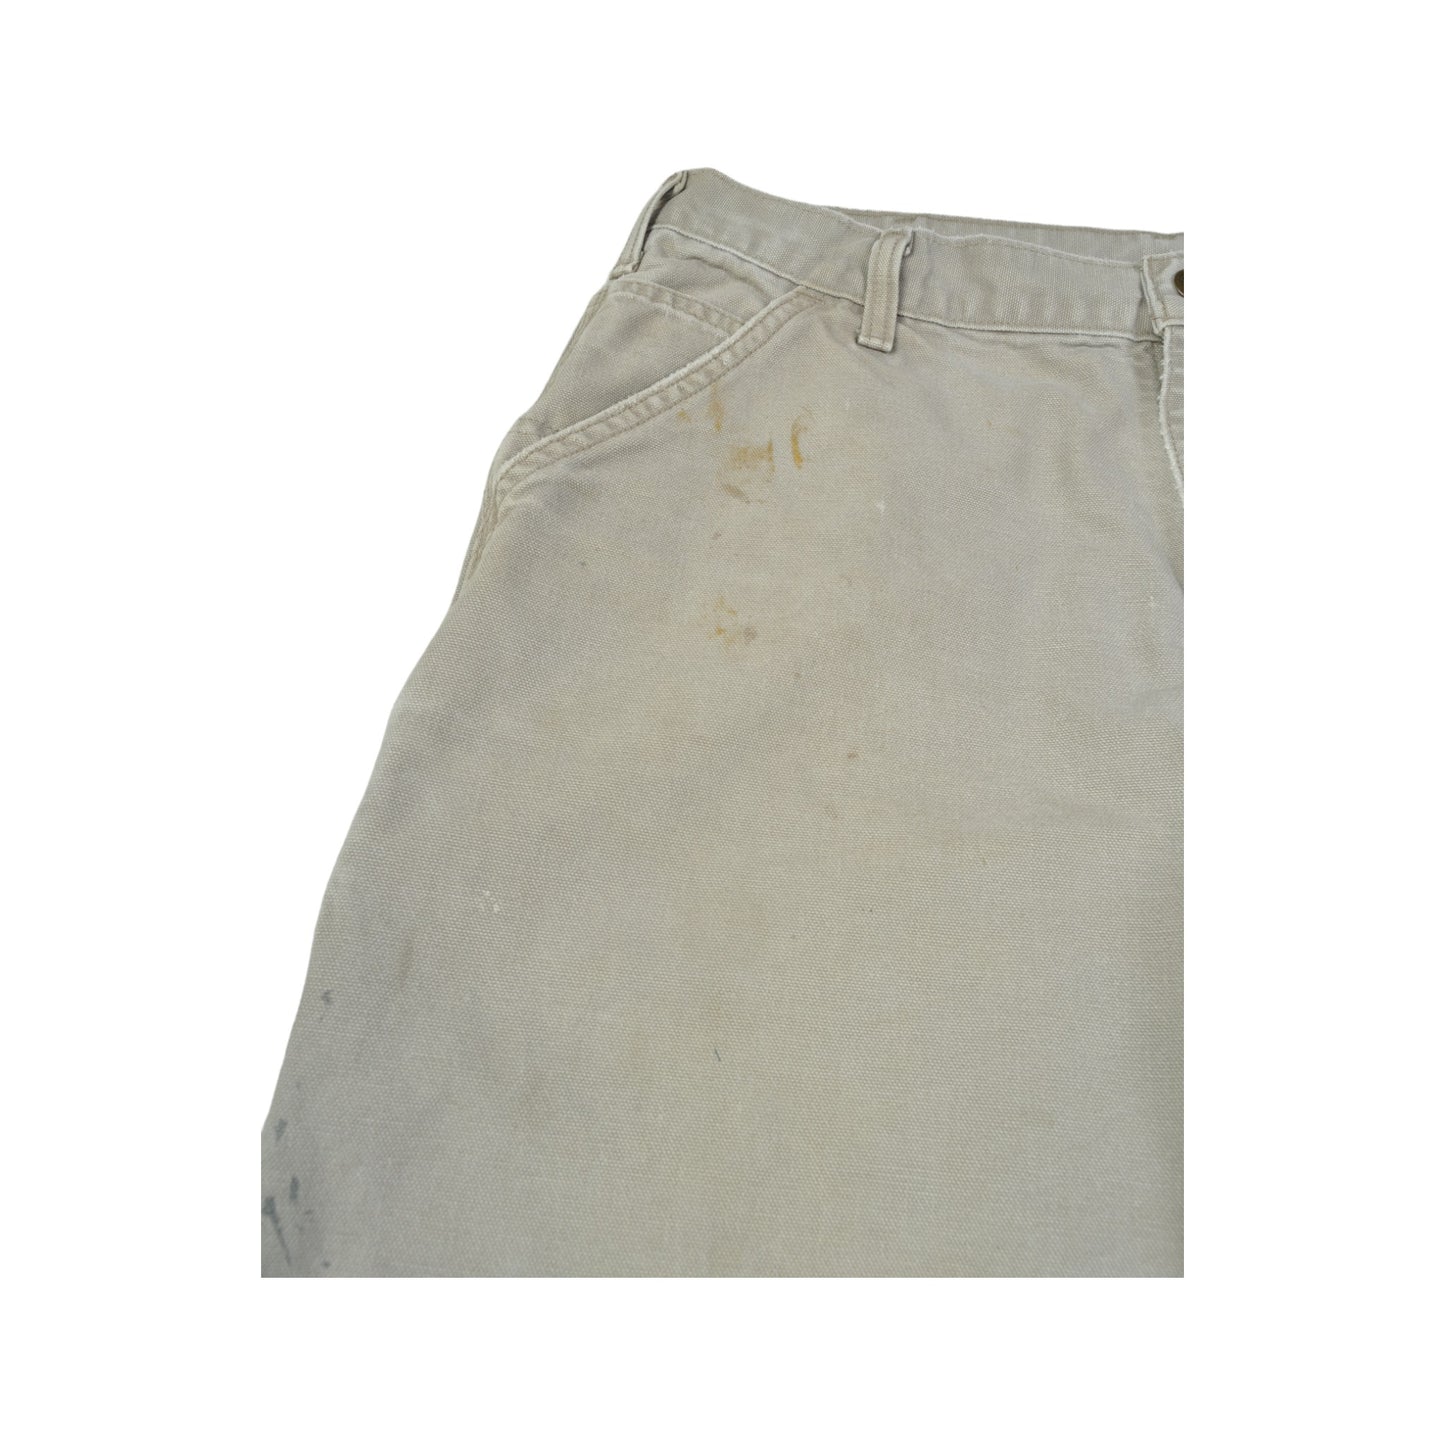 Vintage Carhartt Carpenter Pants Dungaree Fit Khaki W36 L30